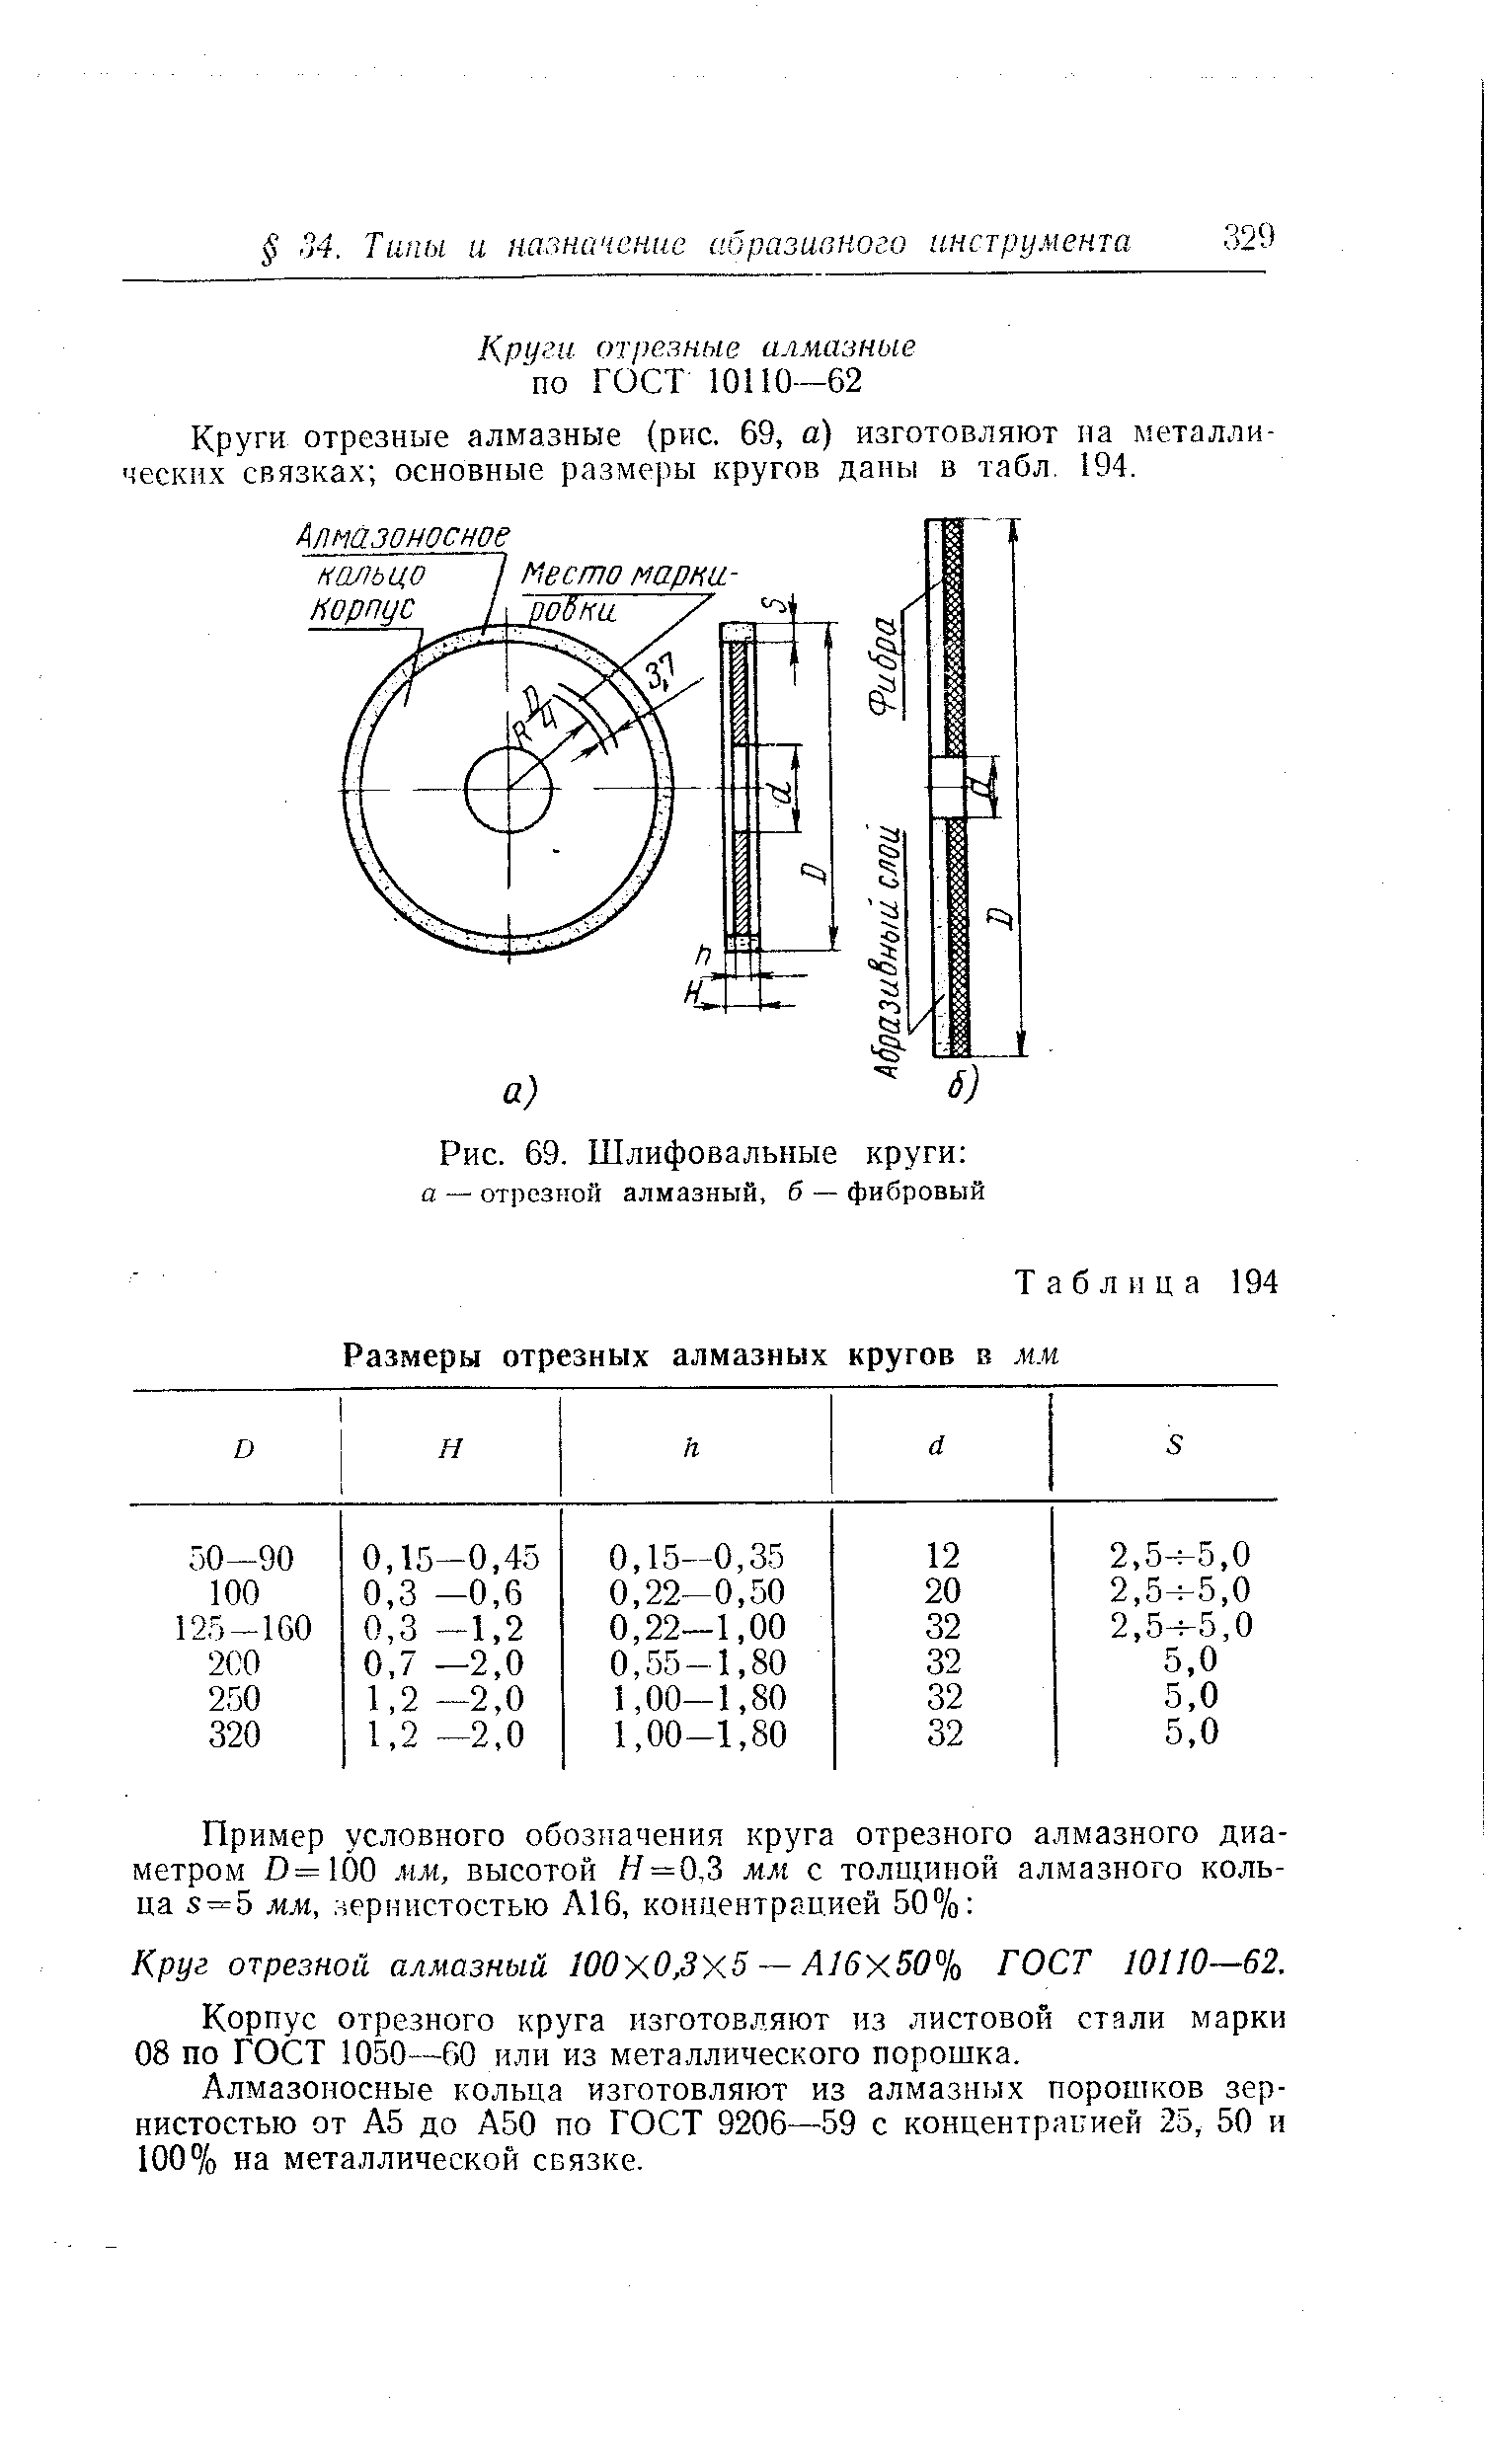 Таблица 194 Размеры отрезных алмазных кругов в лш
